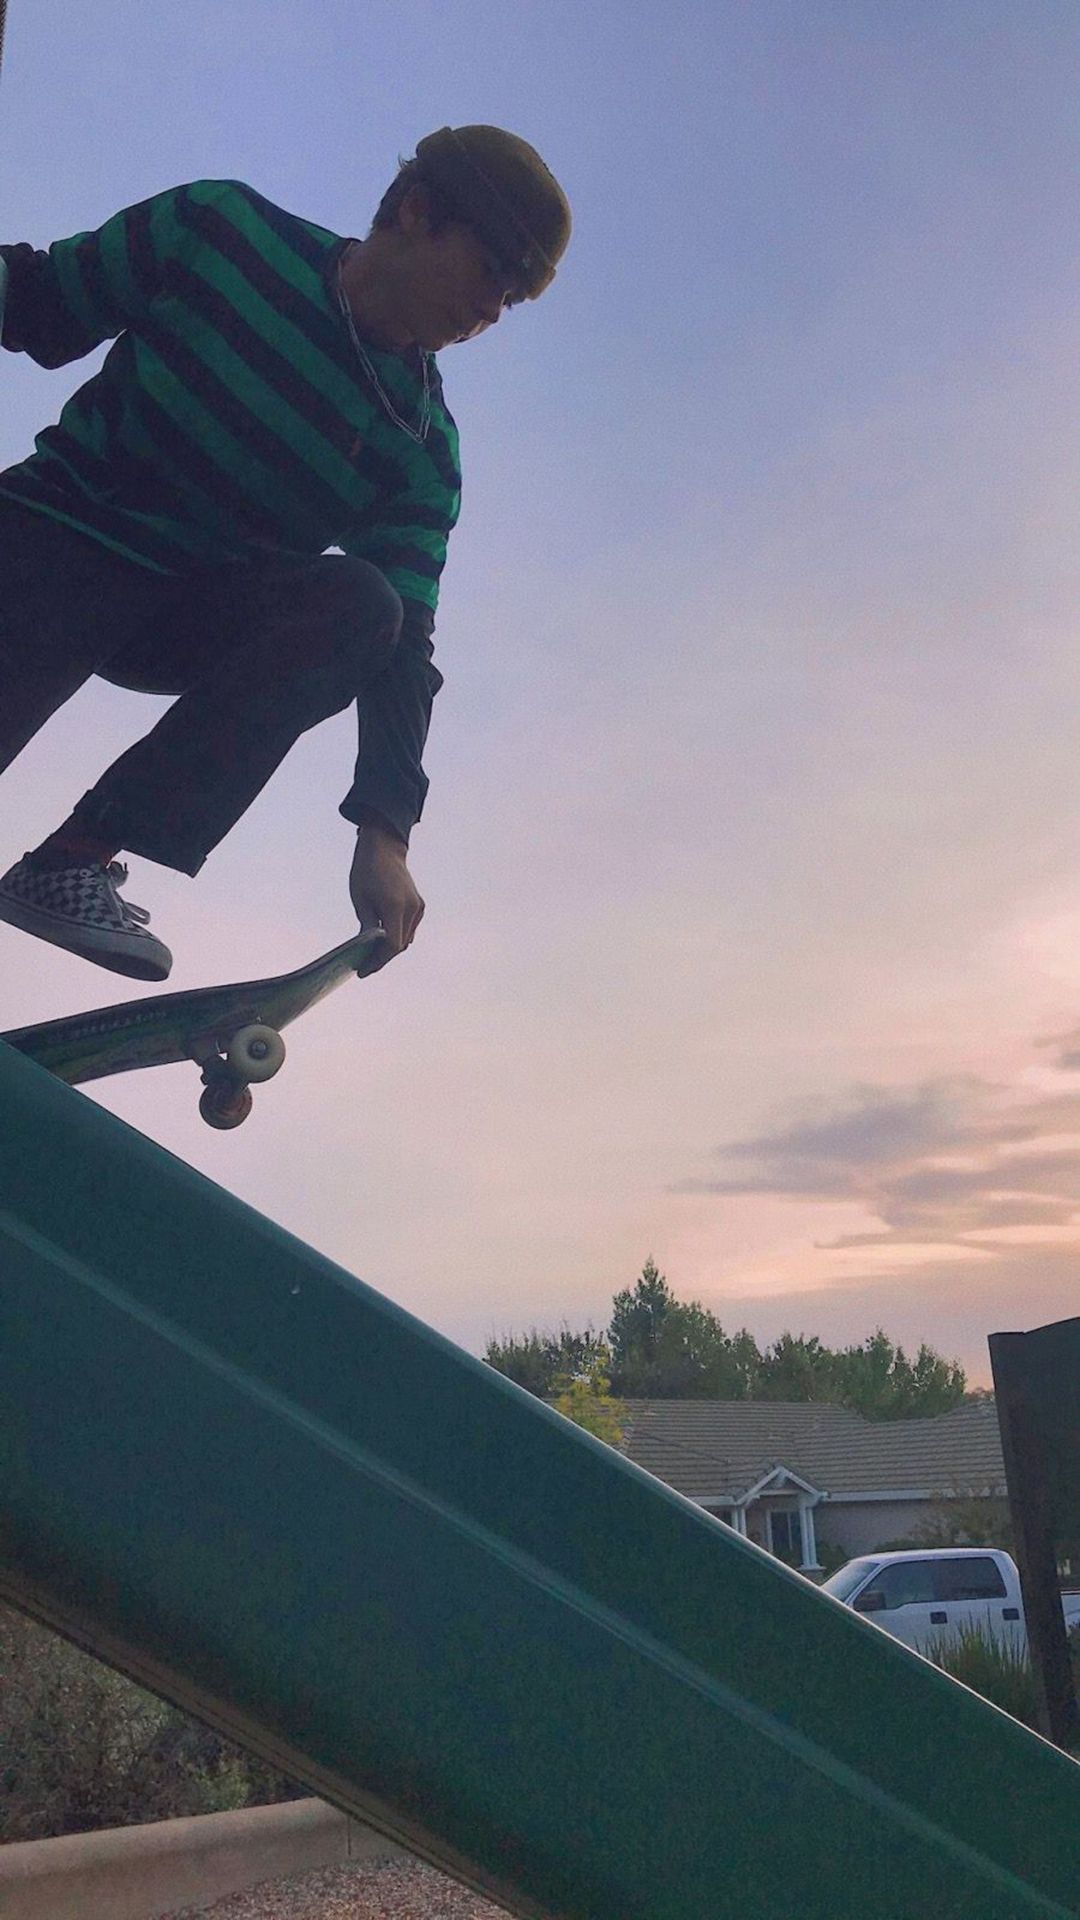 A person riding a skateboard down a green ramp - Skate, skater